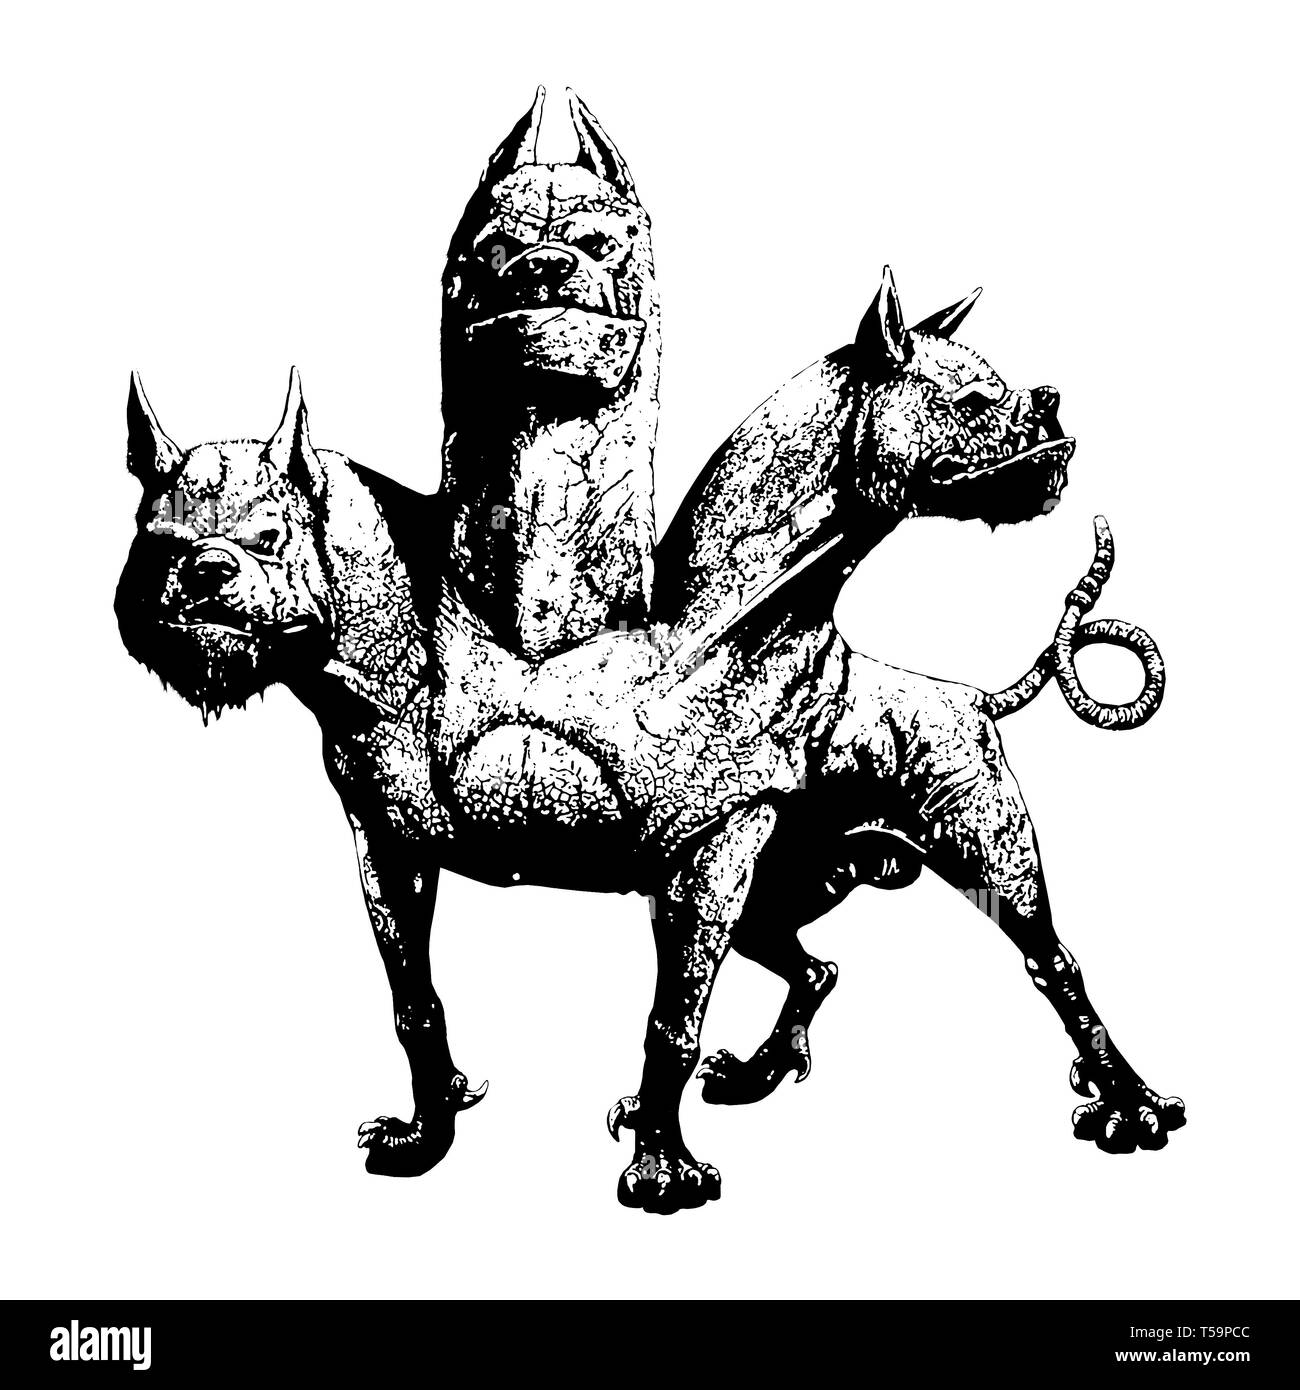 Cerberus dog hi-res stock - Alamy